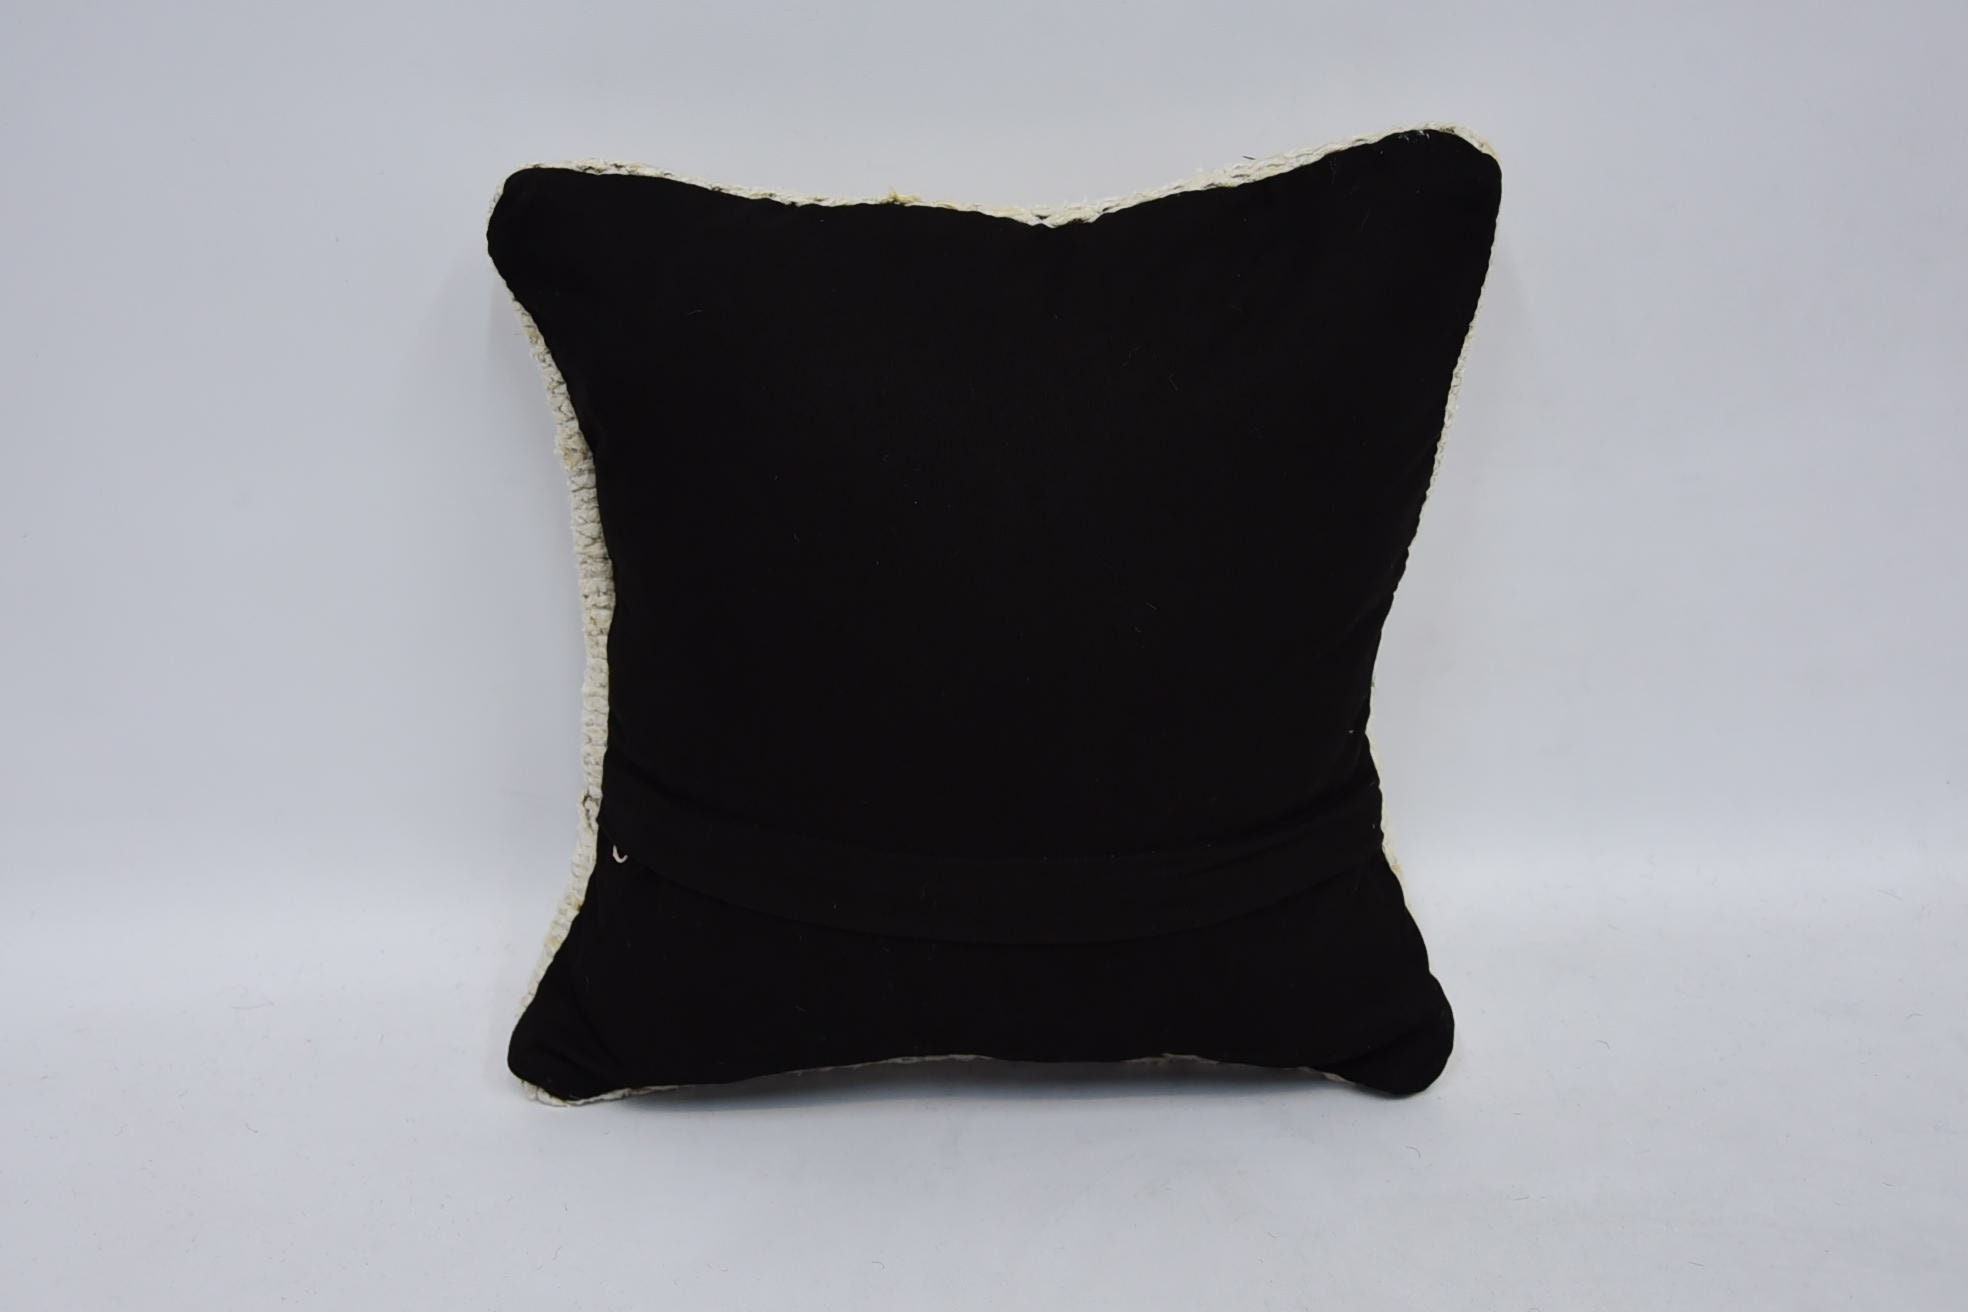 12"x12" White Cushion Cover, Turkish Kilim Pillow, Ethnical Kilim Rug Pillow, Handmade Kilim Cushion, Crochet Pattern Pillow